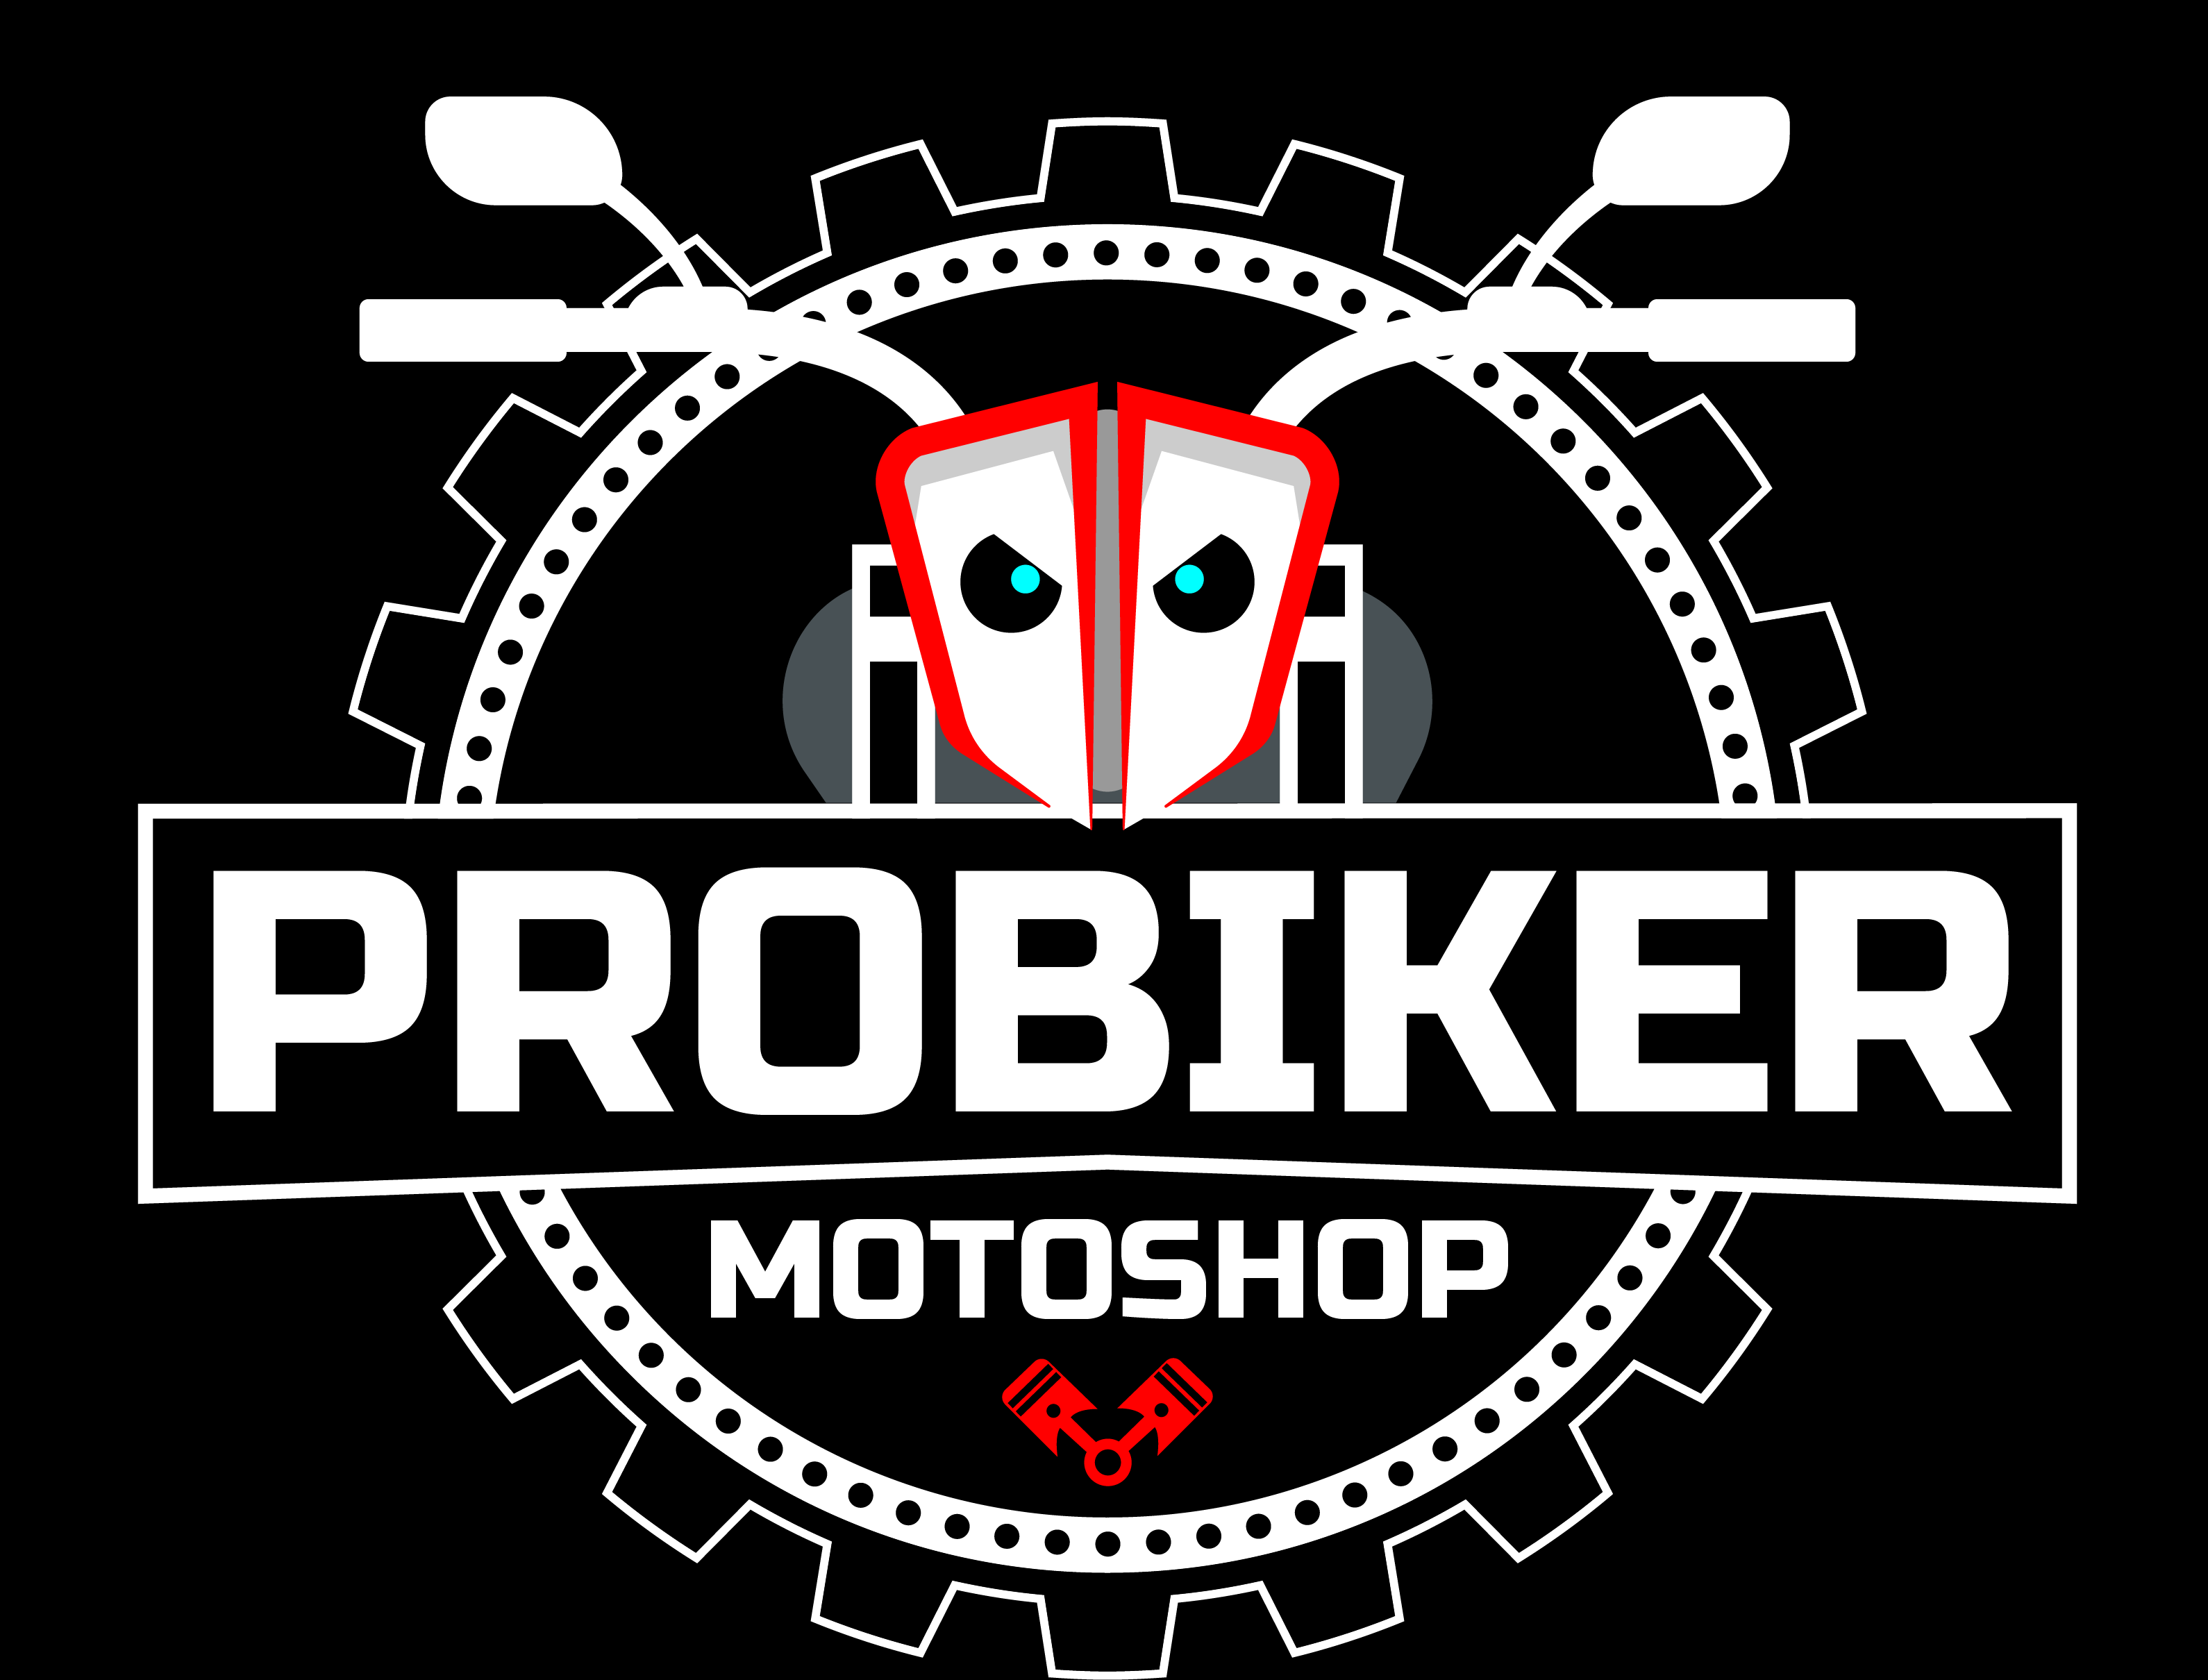 ProBiker Moto Shop